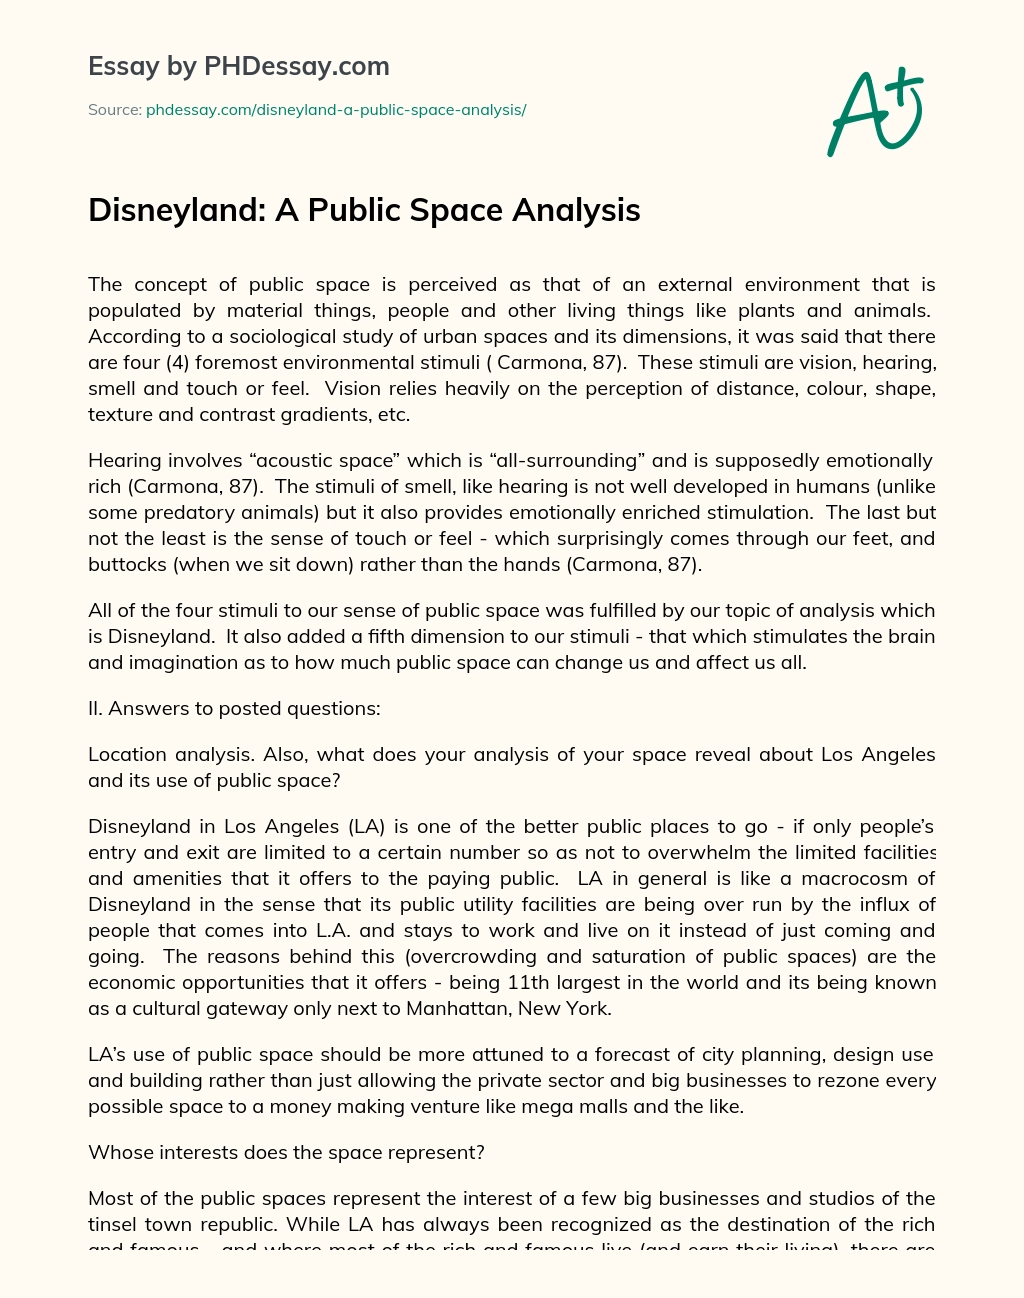 Disneyland:  A Public Space Analysis essay